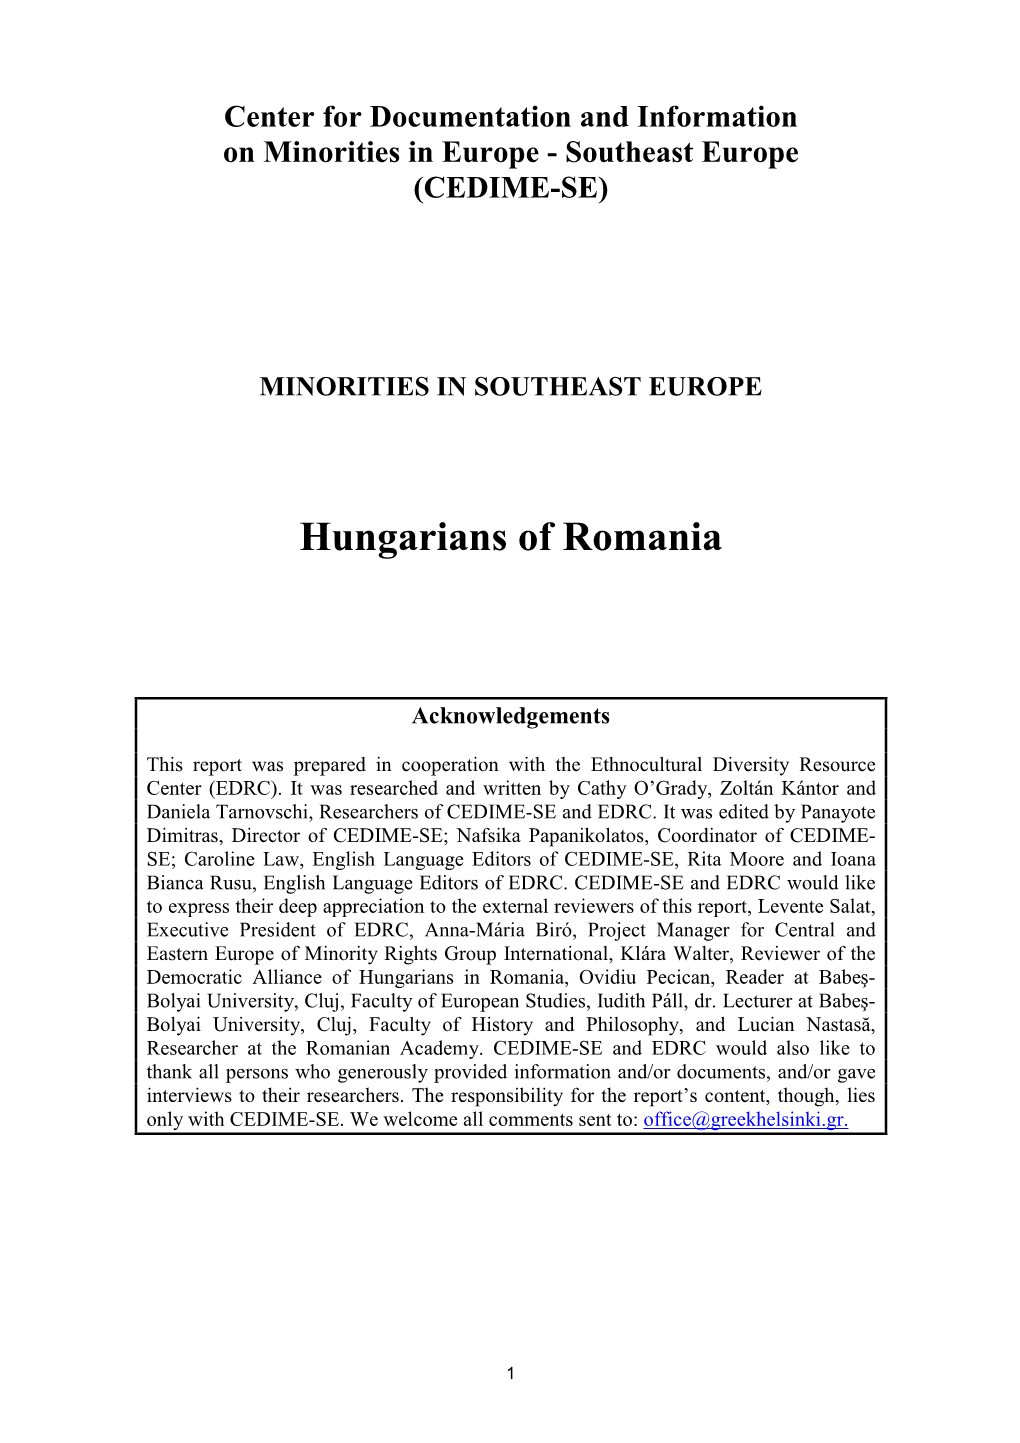 Hungarians of Romania